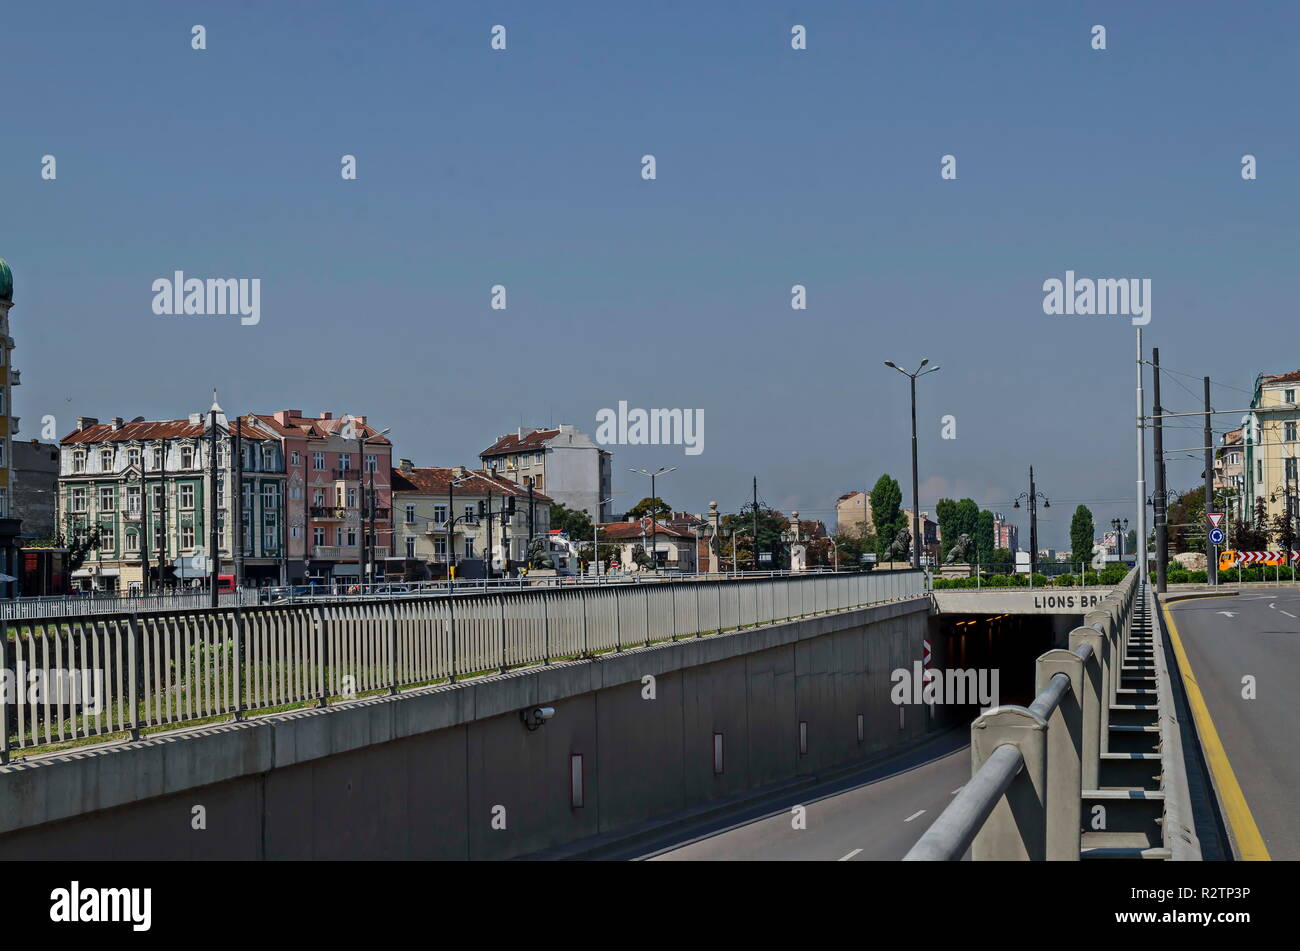 Cityscape of bulgarian capital city Sofia near by Lions bridge, Sofia, Bulgaria, Europe Stock Photo